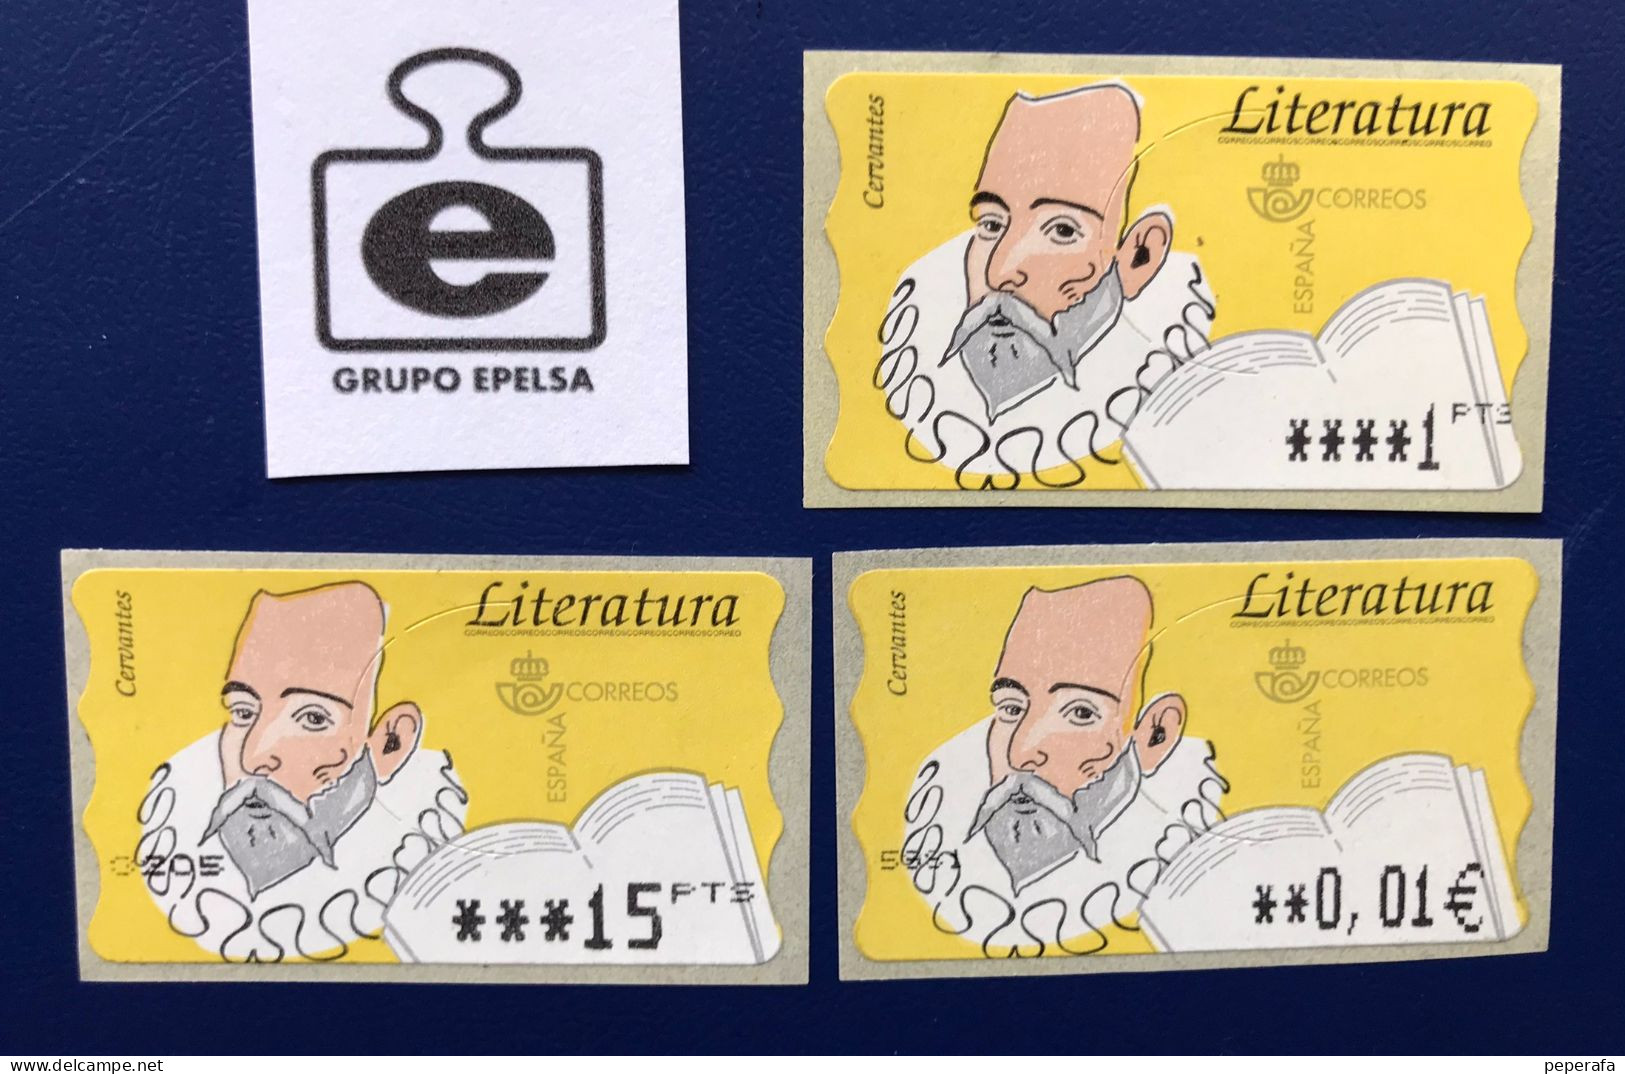 España Spain 1996, LITERATURA CERVANTES, ATM EPELSA, 3 ATM, PAPEL FOSFORESCENTE, NUEVO PTS / EURO - Automaatzegels [ATM]